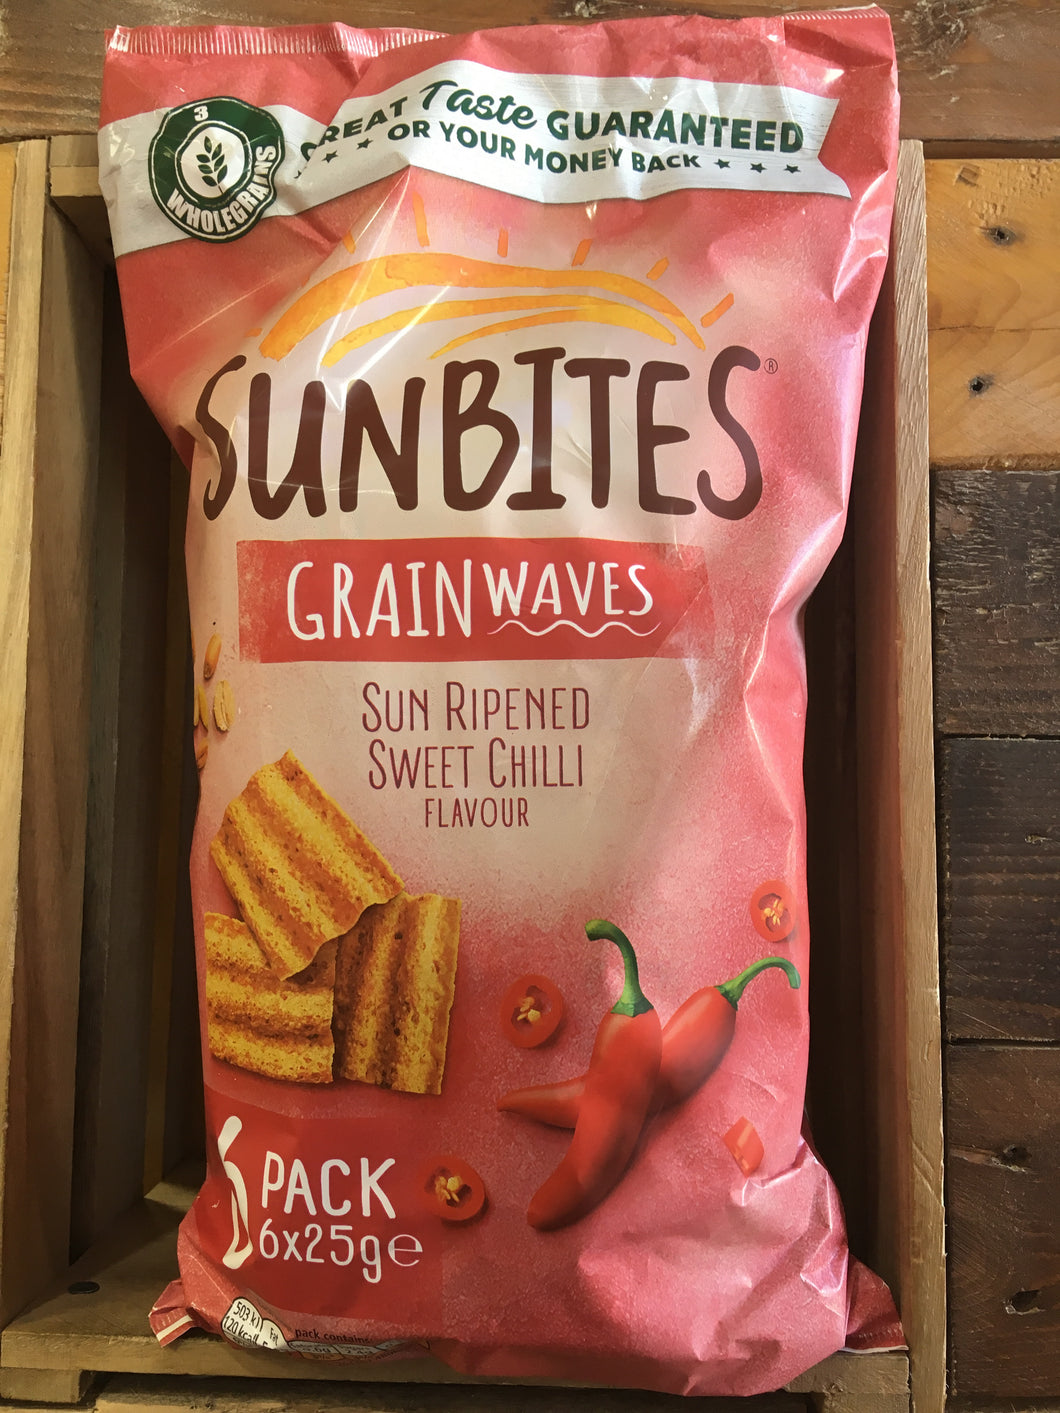 Sunbites Grainwaves Sun Ripened Sweet Chilli Flavour 6x25g